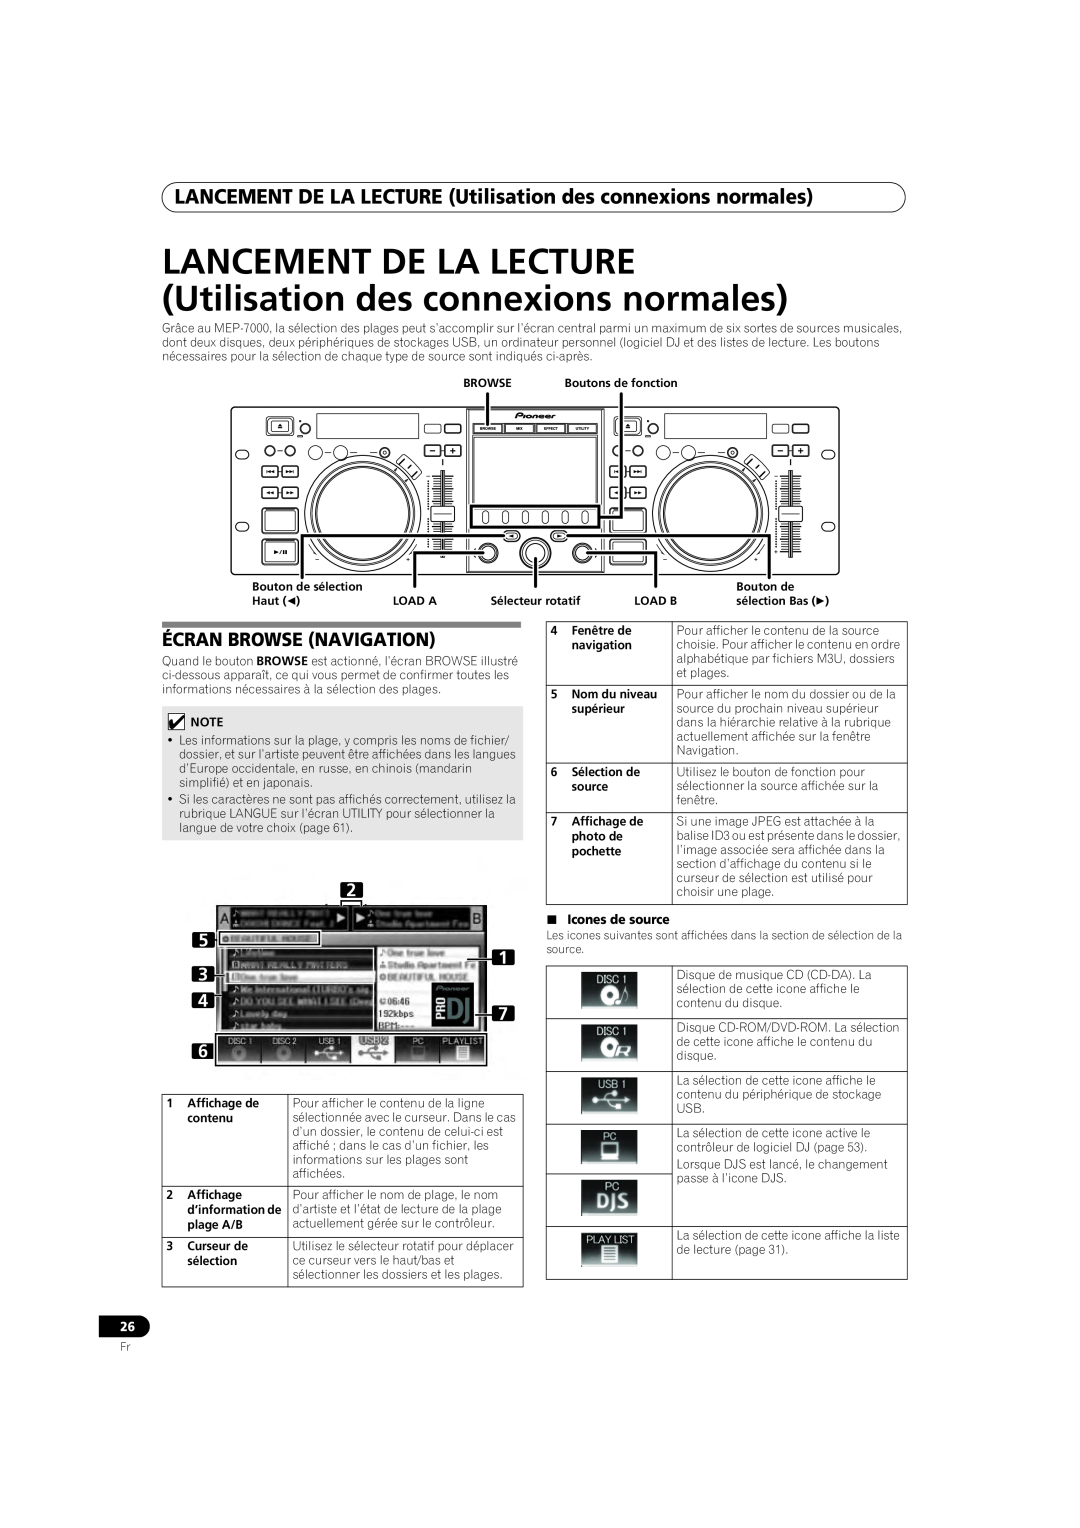 Pioneer MEP-7000 operating instructions Écran Browse Navigation, 2 5 1, Icones de source 